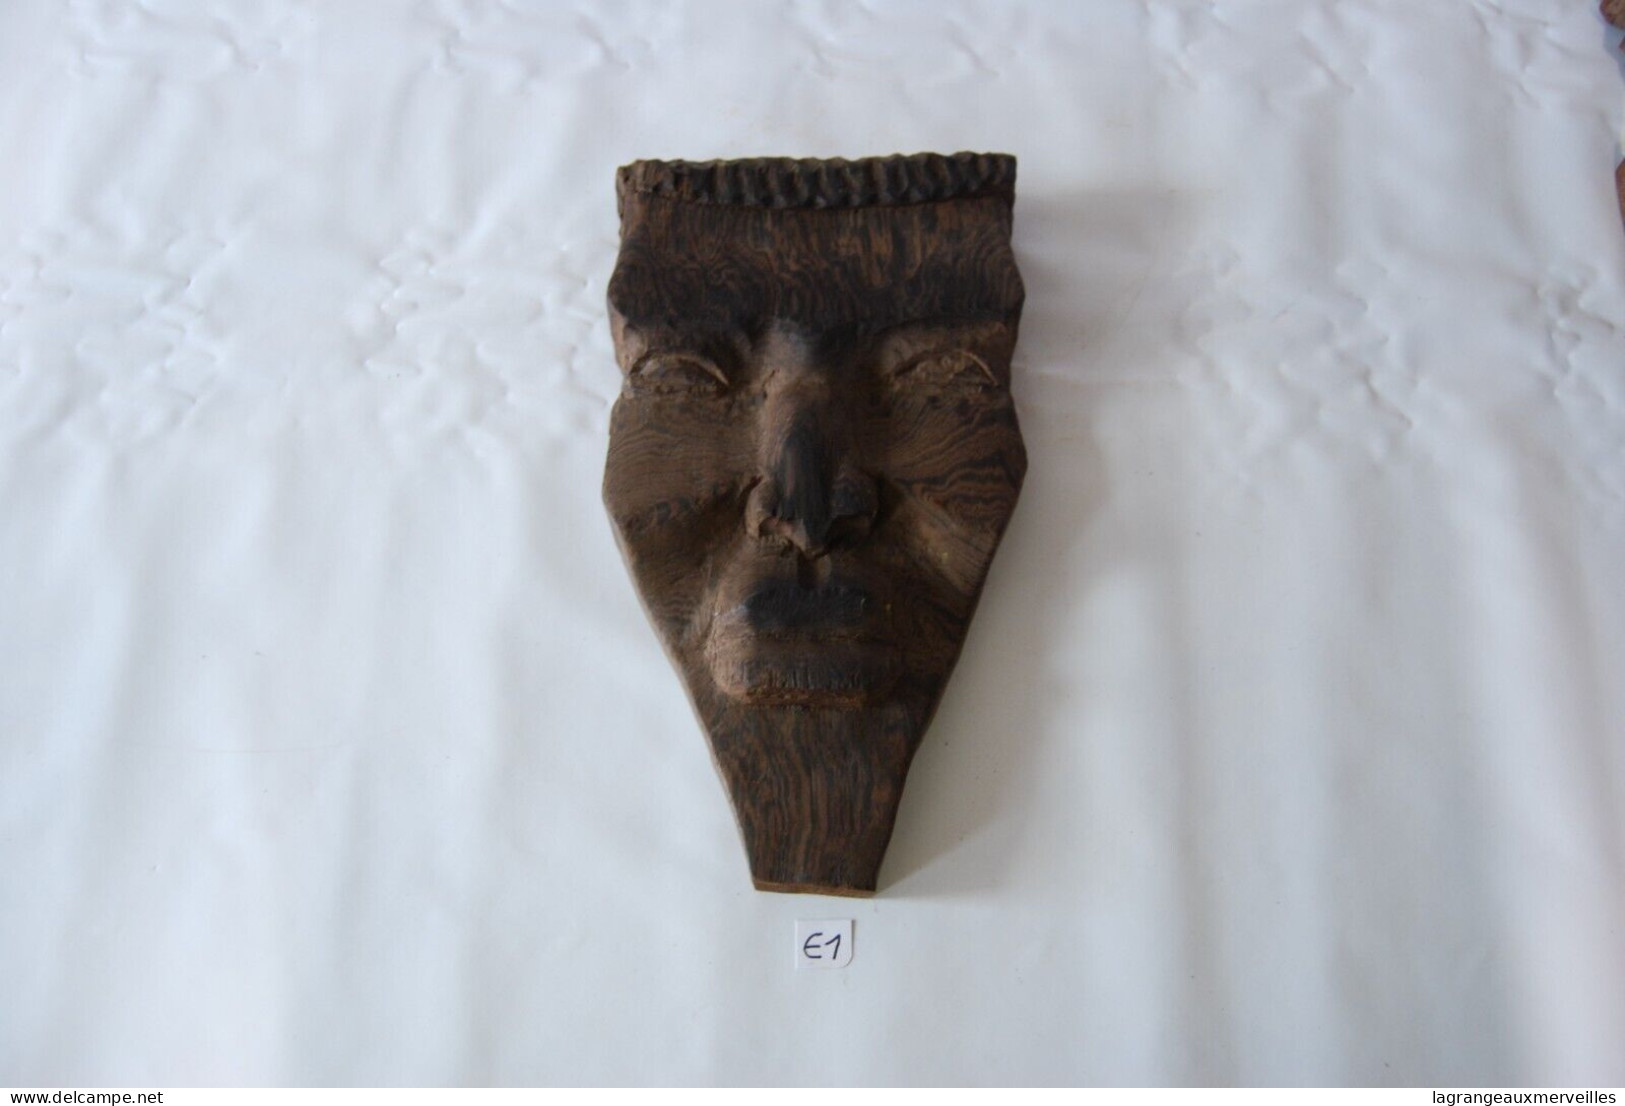 E1 Ancienne masque buste africain - outil ancien - ethnique - tribal H30